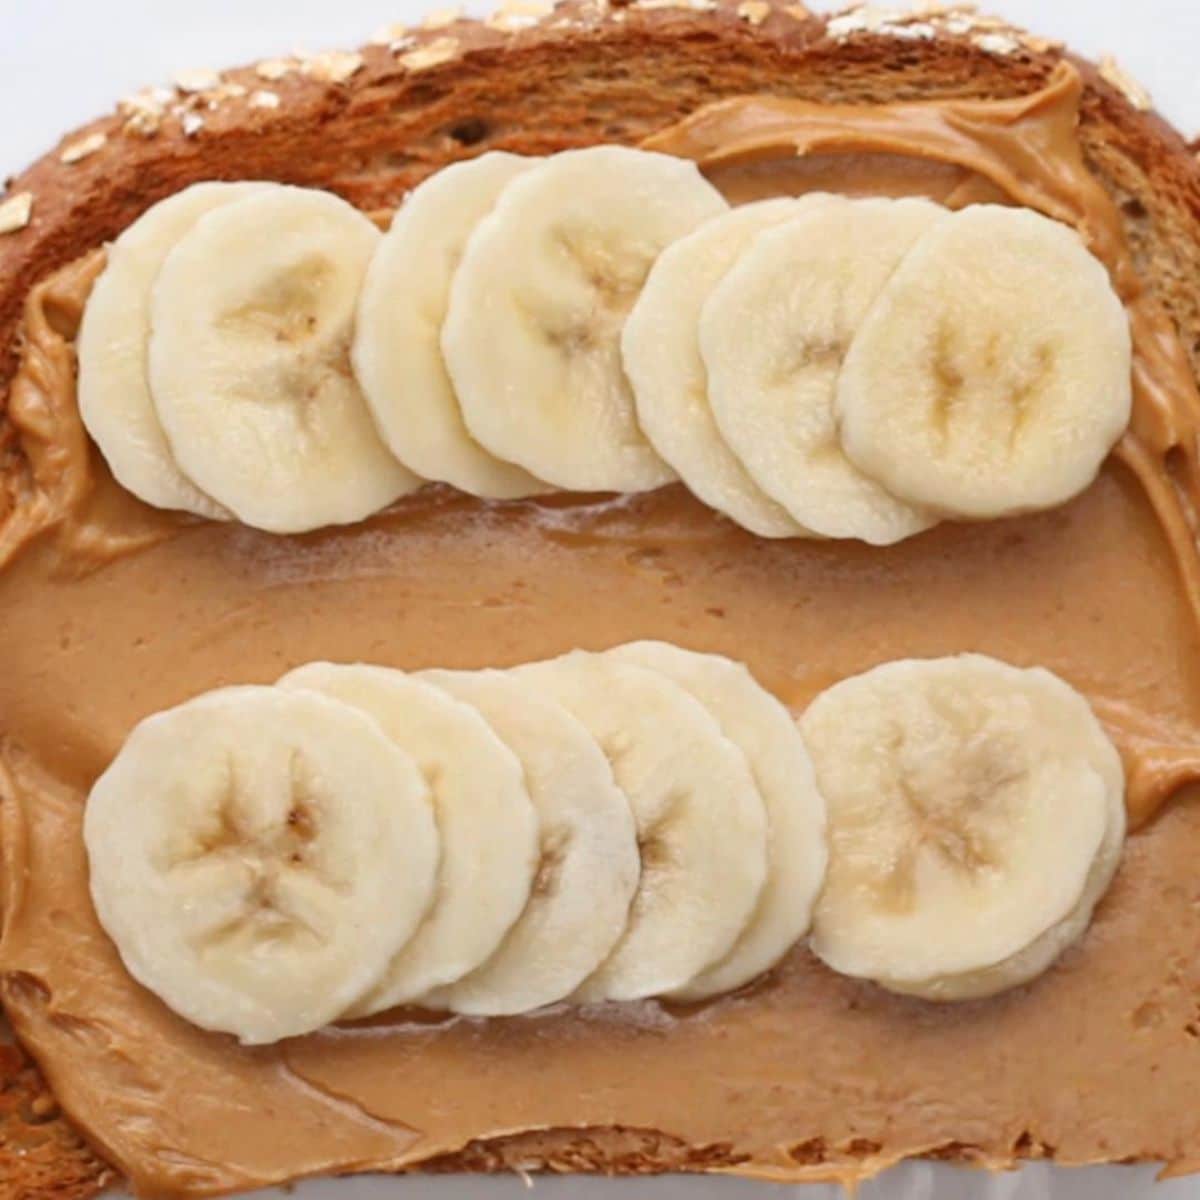 Peanut Butter Banana Toast